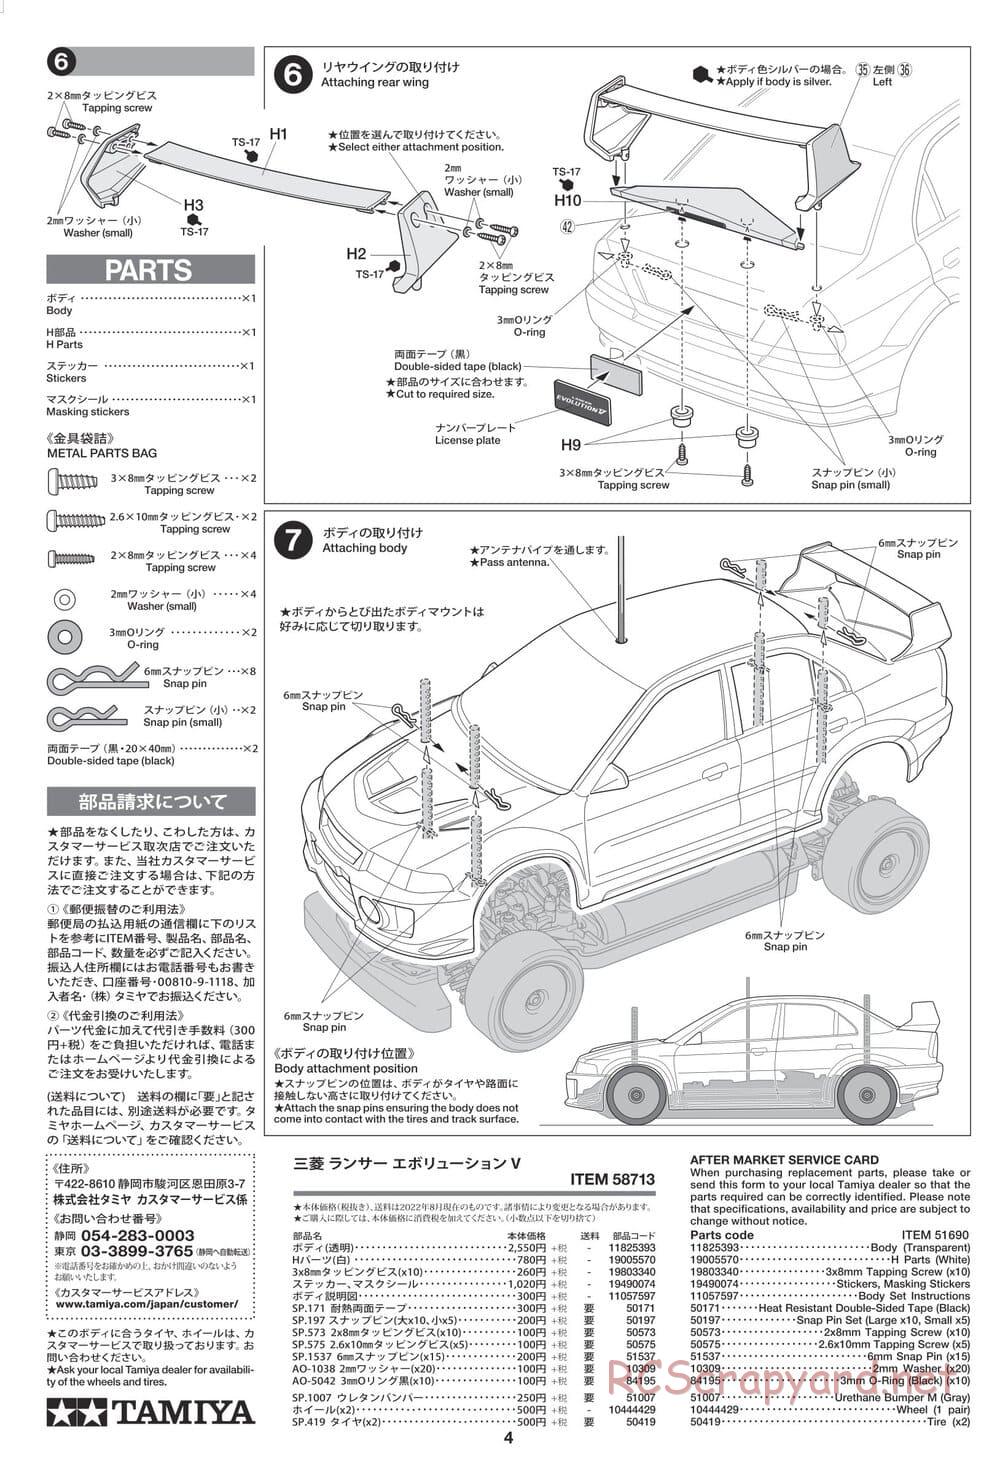 Tamiya - Mitsubishi Lancer Evolution V - TT-02 Chassis - Body Manual - Page 4